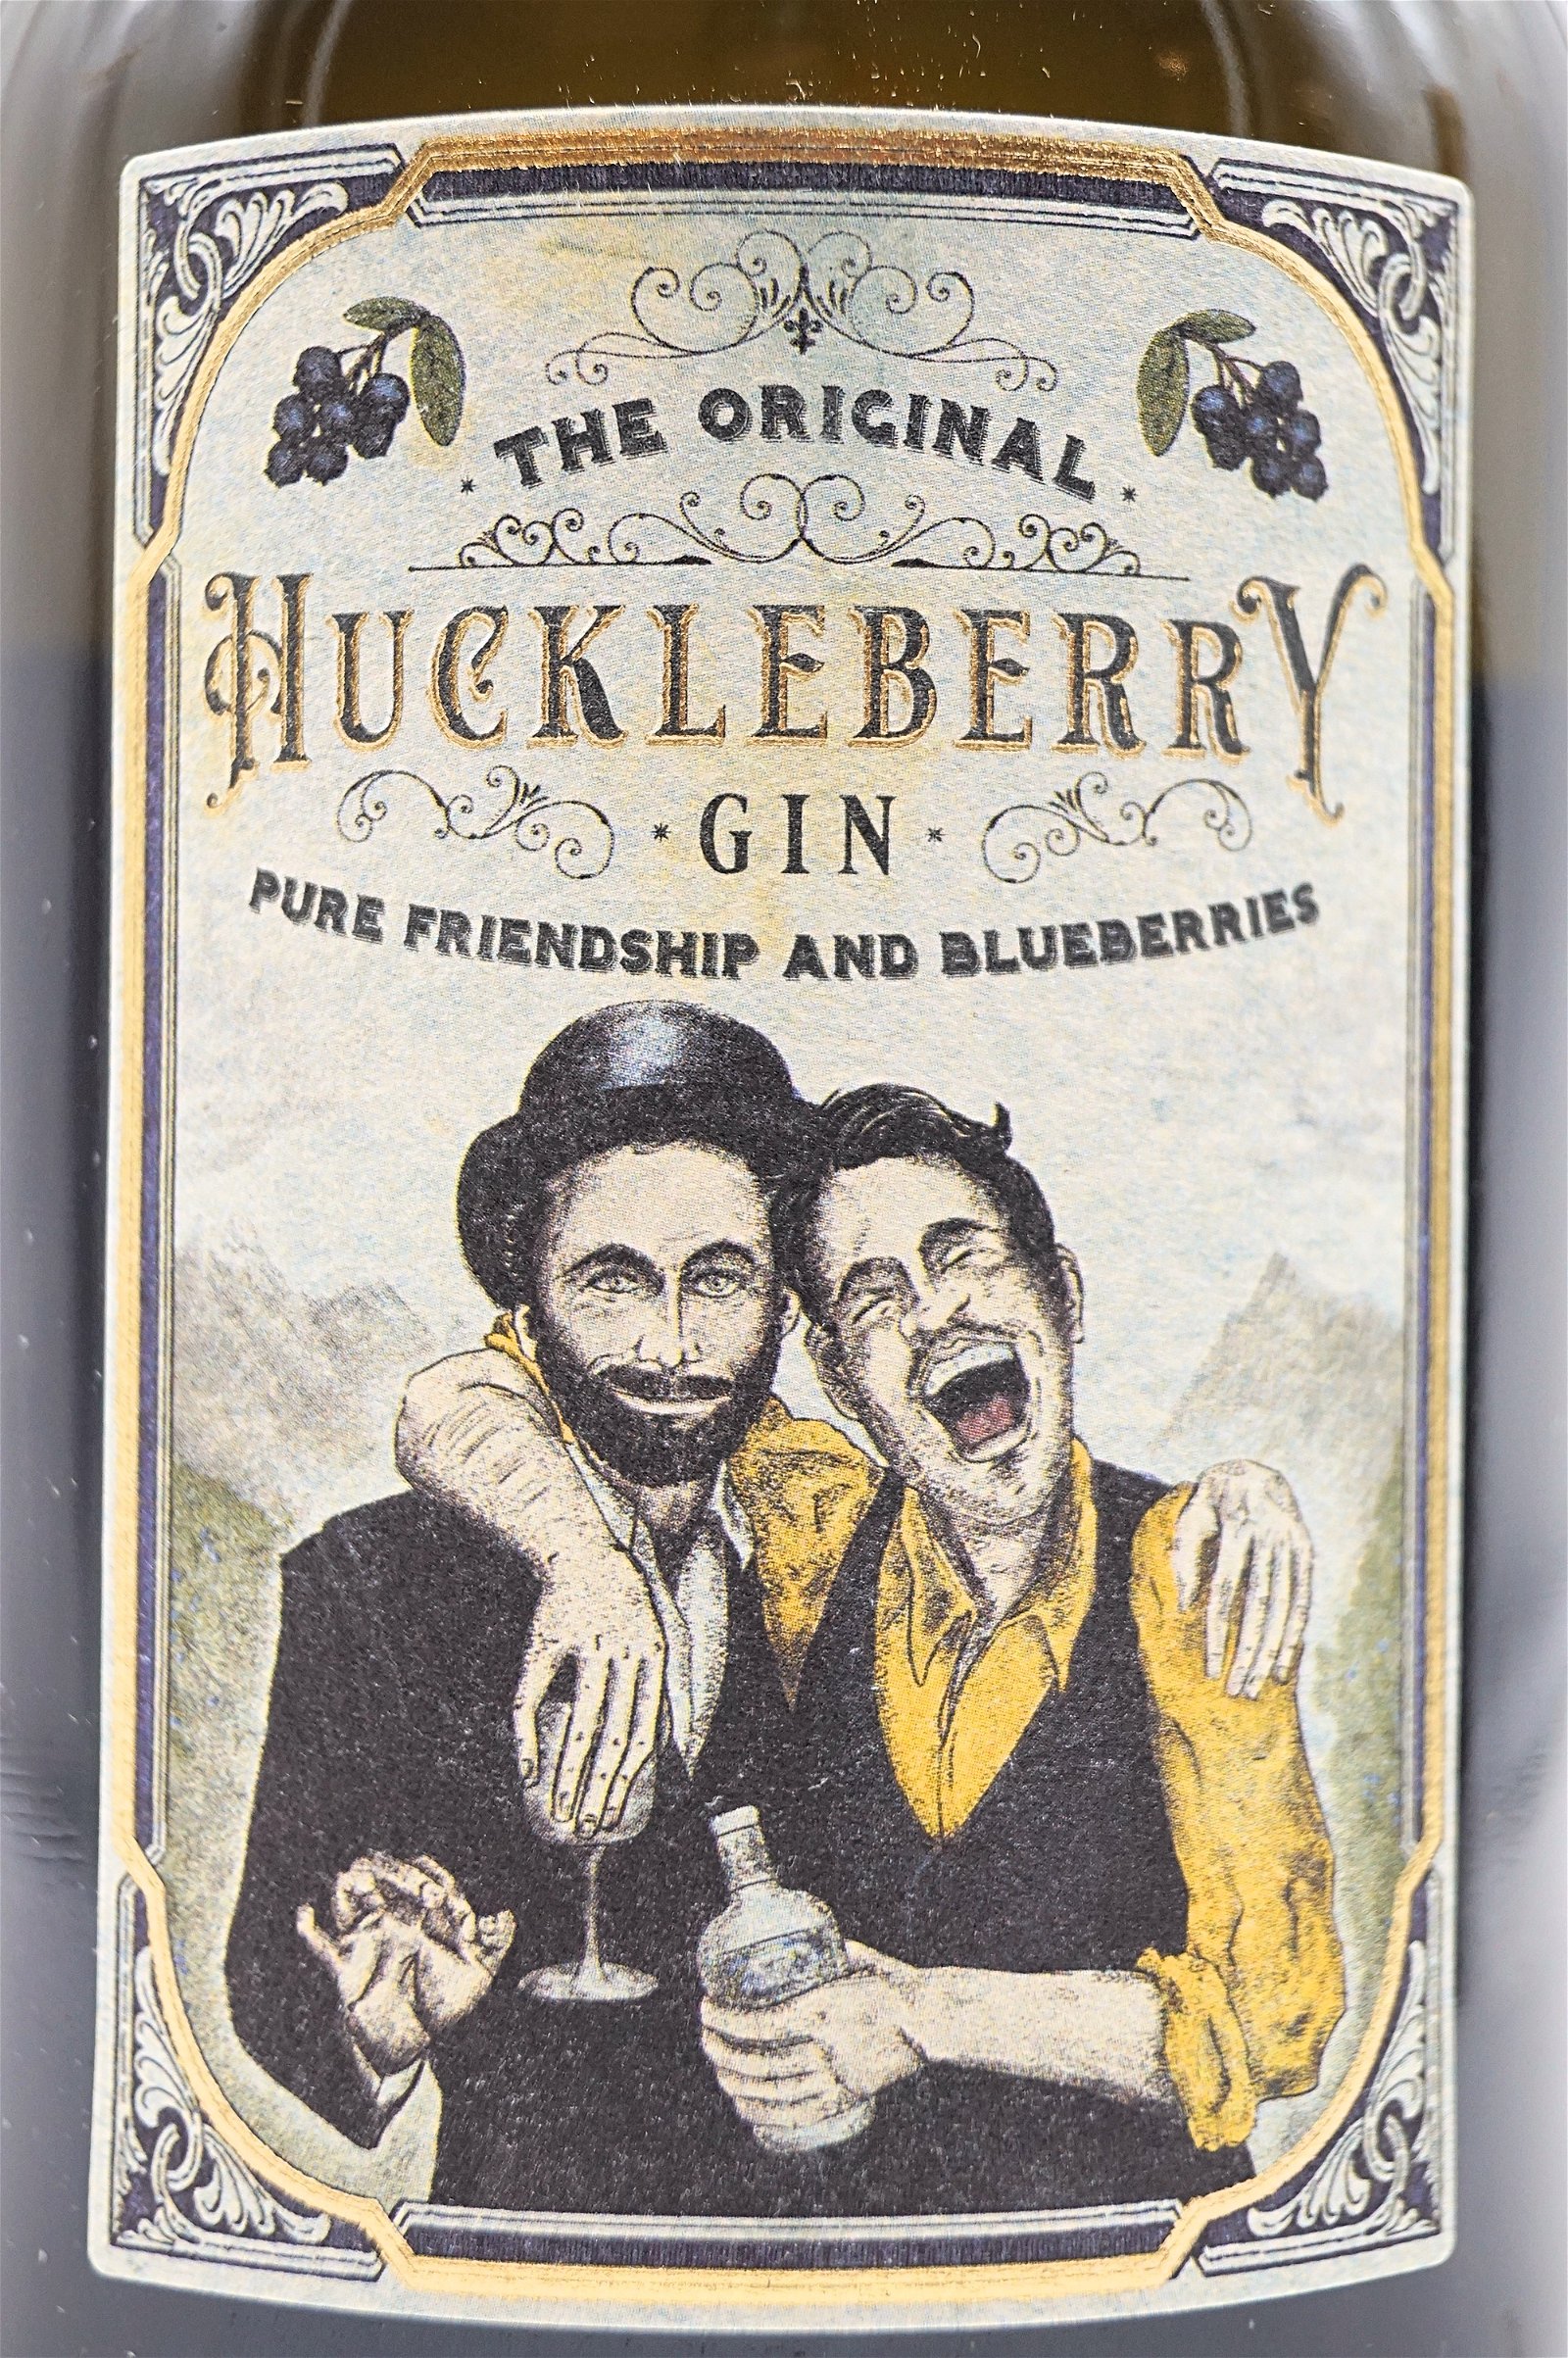 Huckleberry Gin New Western Gin 